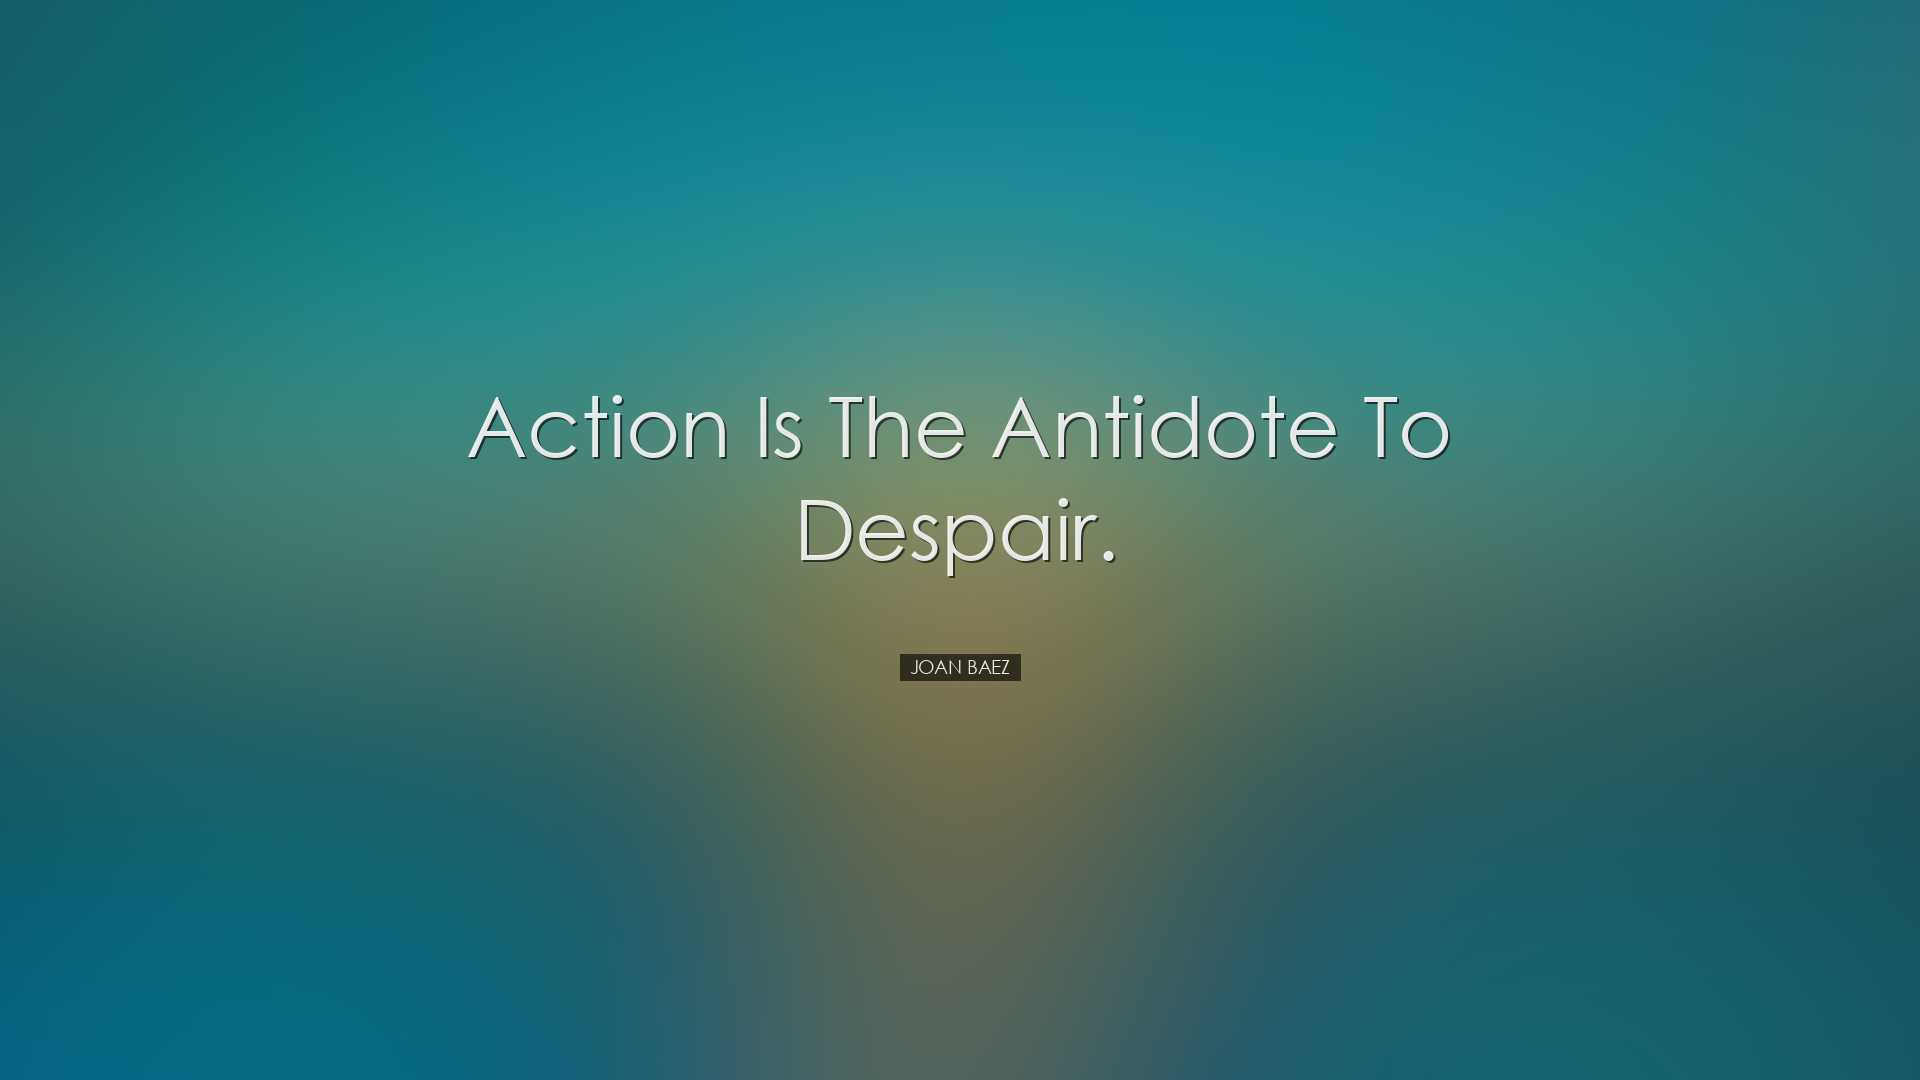 Action is the antidote to despair. - Joan Baez